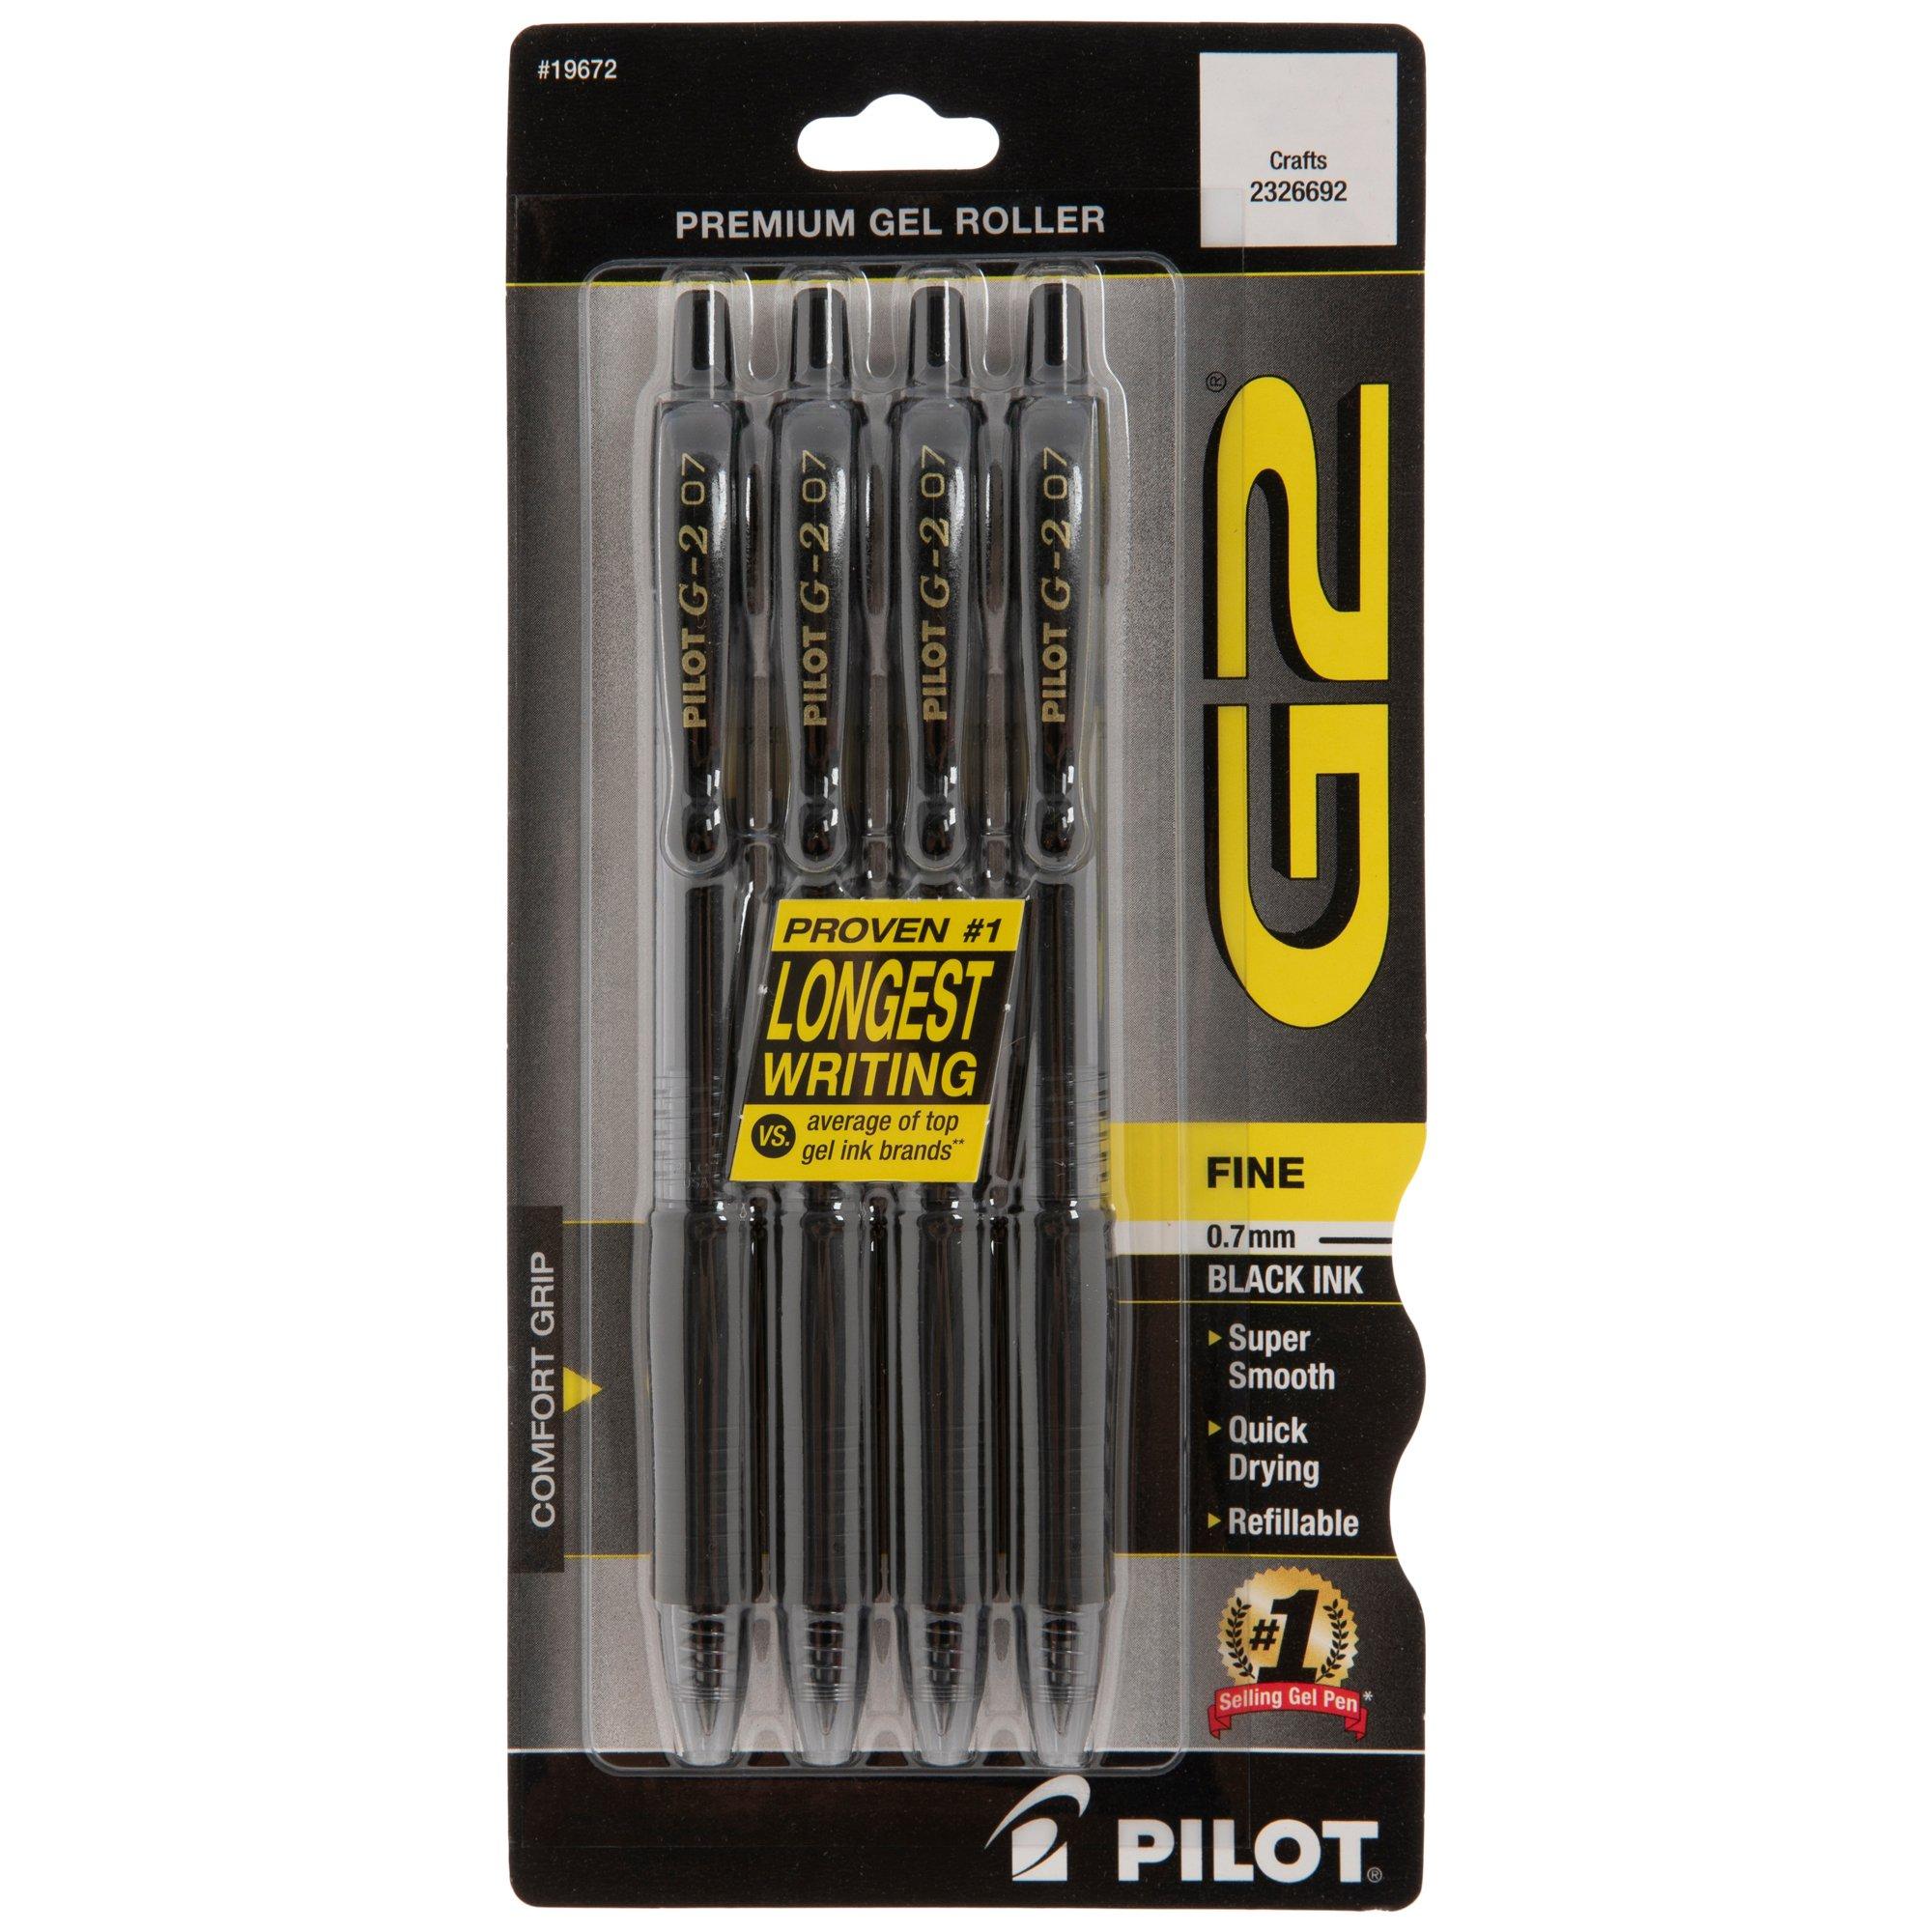 Glitter Gel Ink Pens - 12 Piece Set